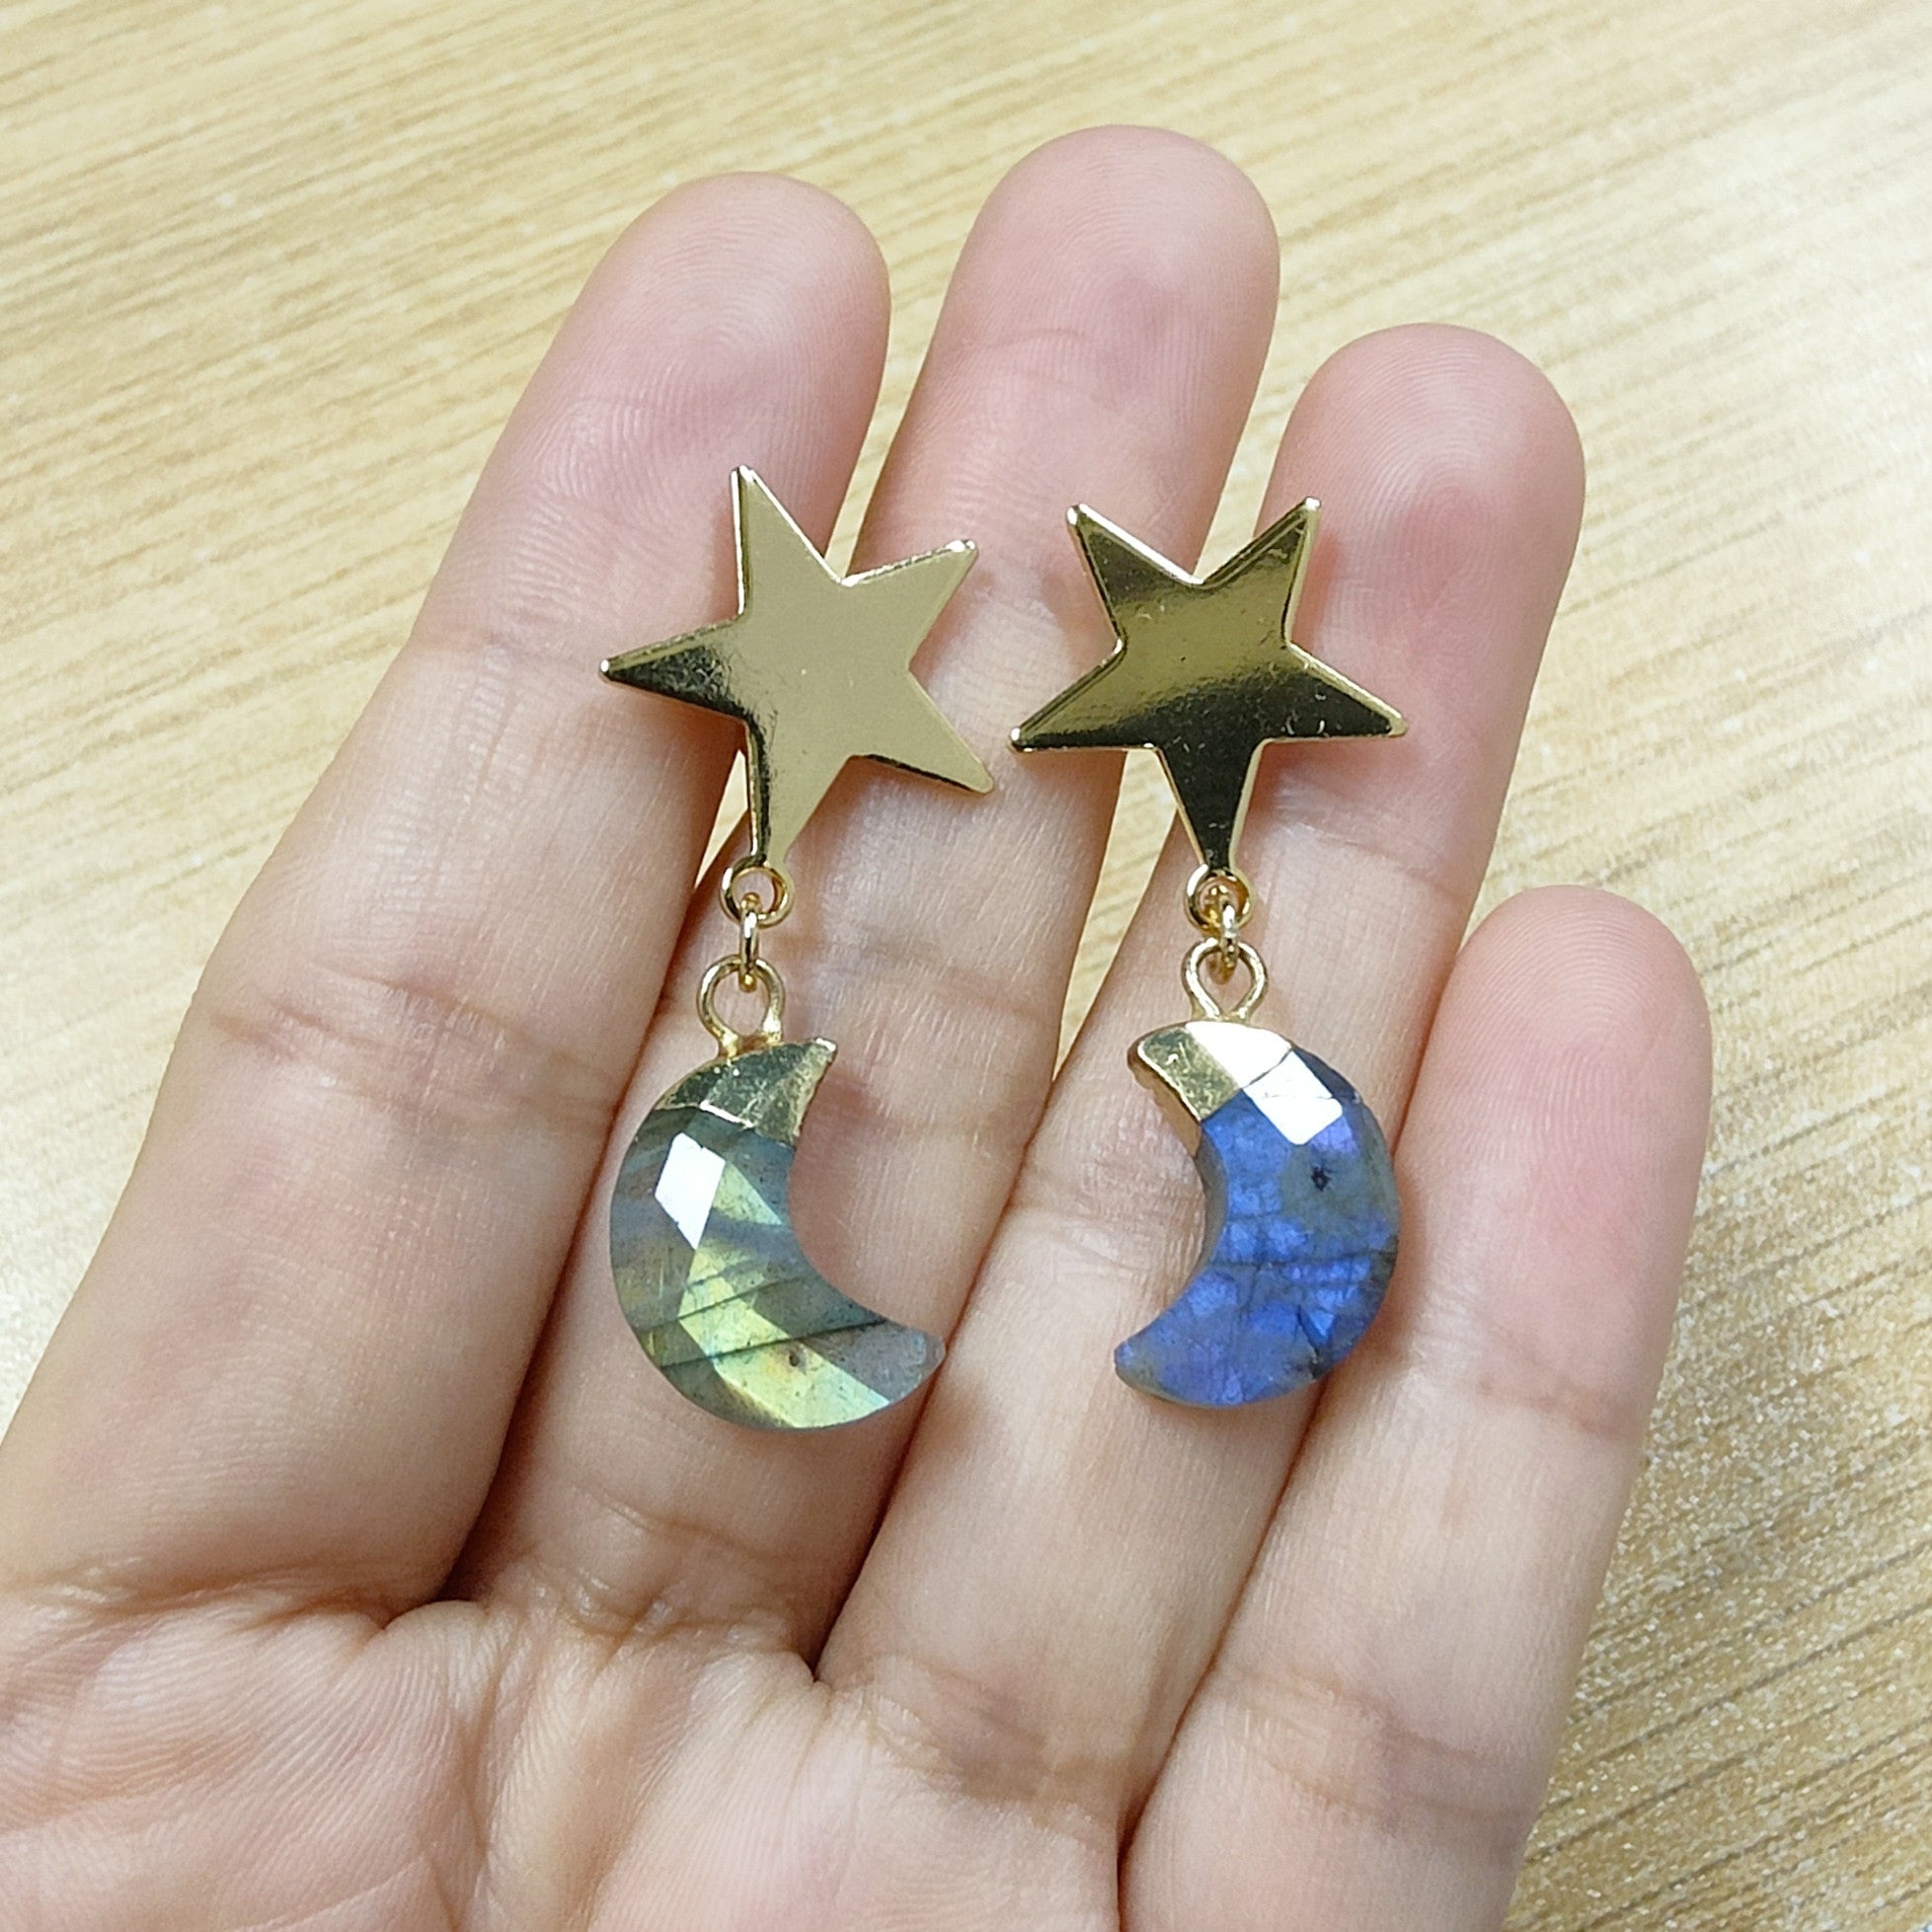 Gold Star Gemstone Moon Earrings, Faceted Healing Crystal Stone Crescent Moon Earrings, Wholesale Jewelry AL571